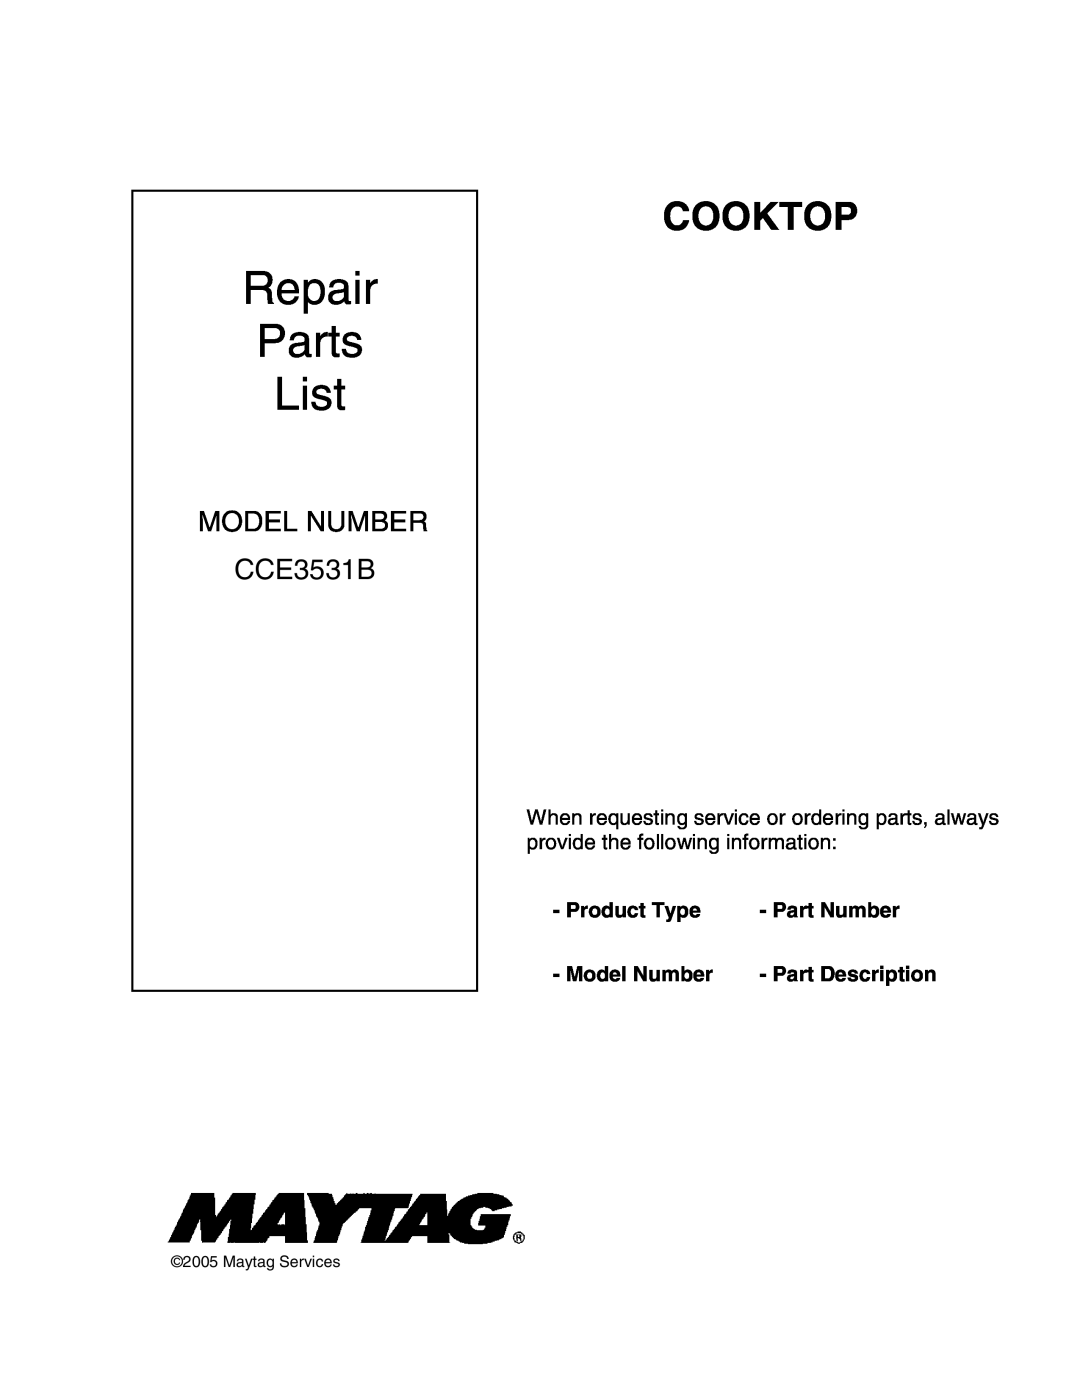 Maytag CC3531B manual Product Type, Part Number, Model Number, Part Description, Repair Parts List, Cooktop 